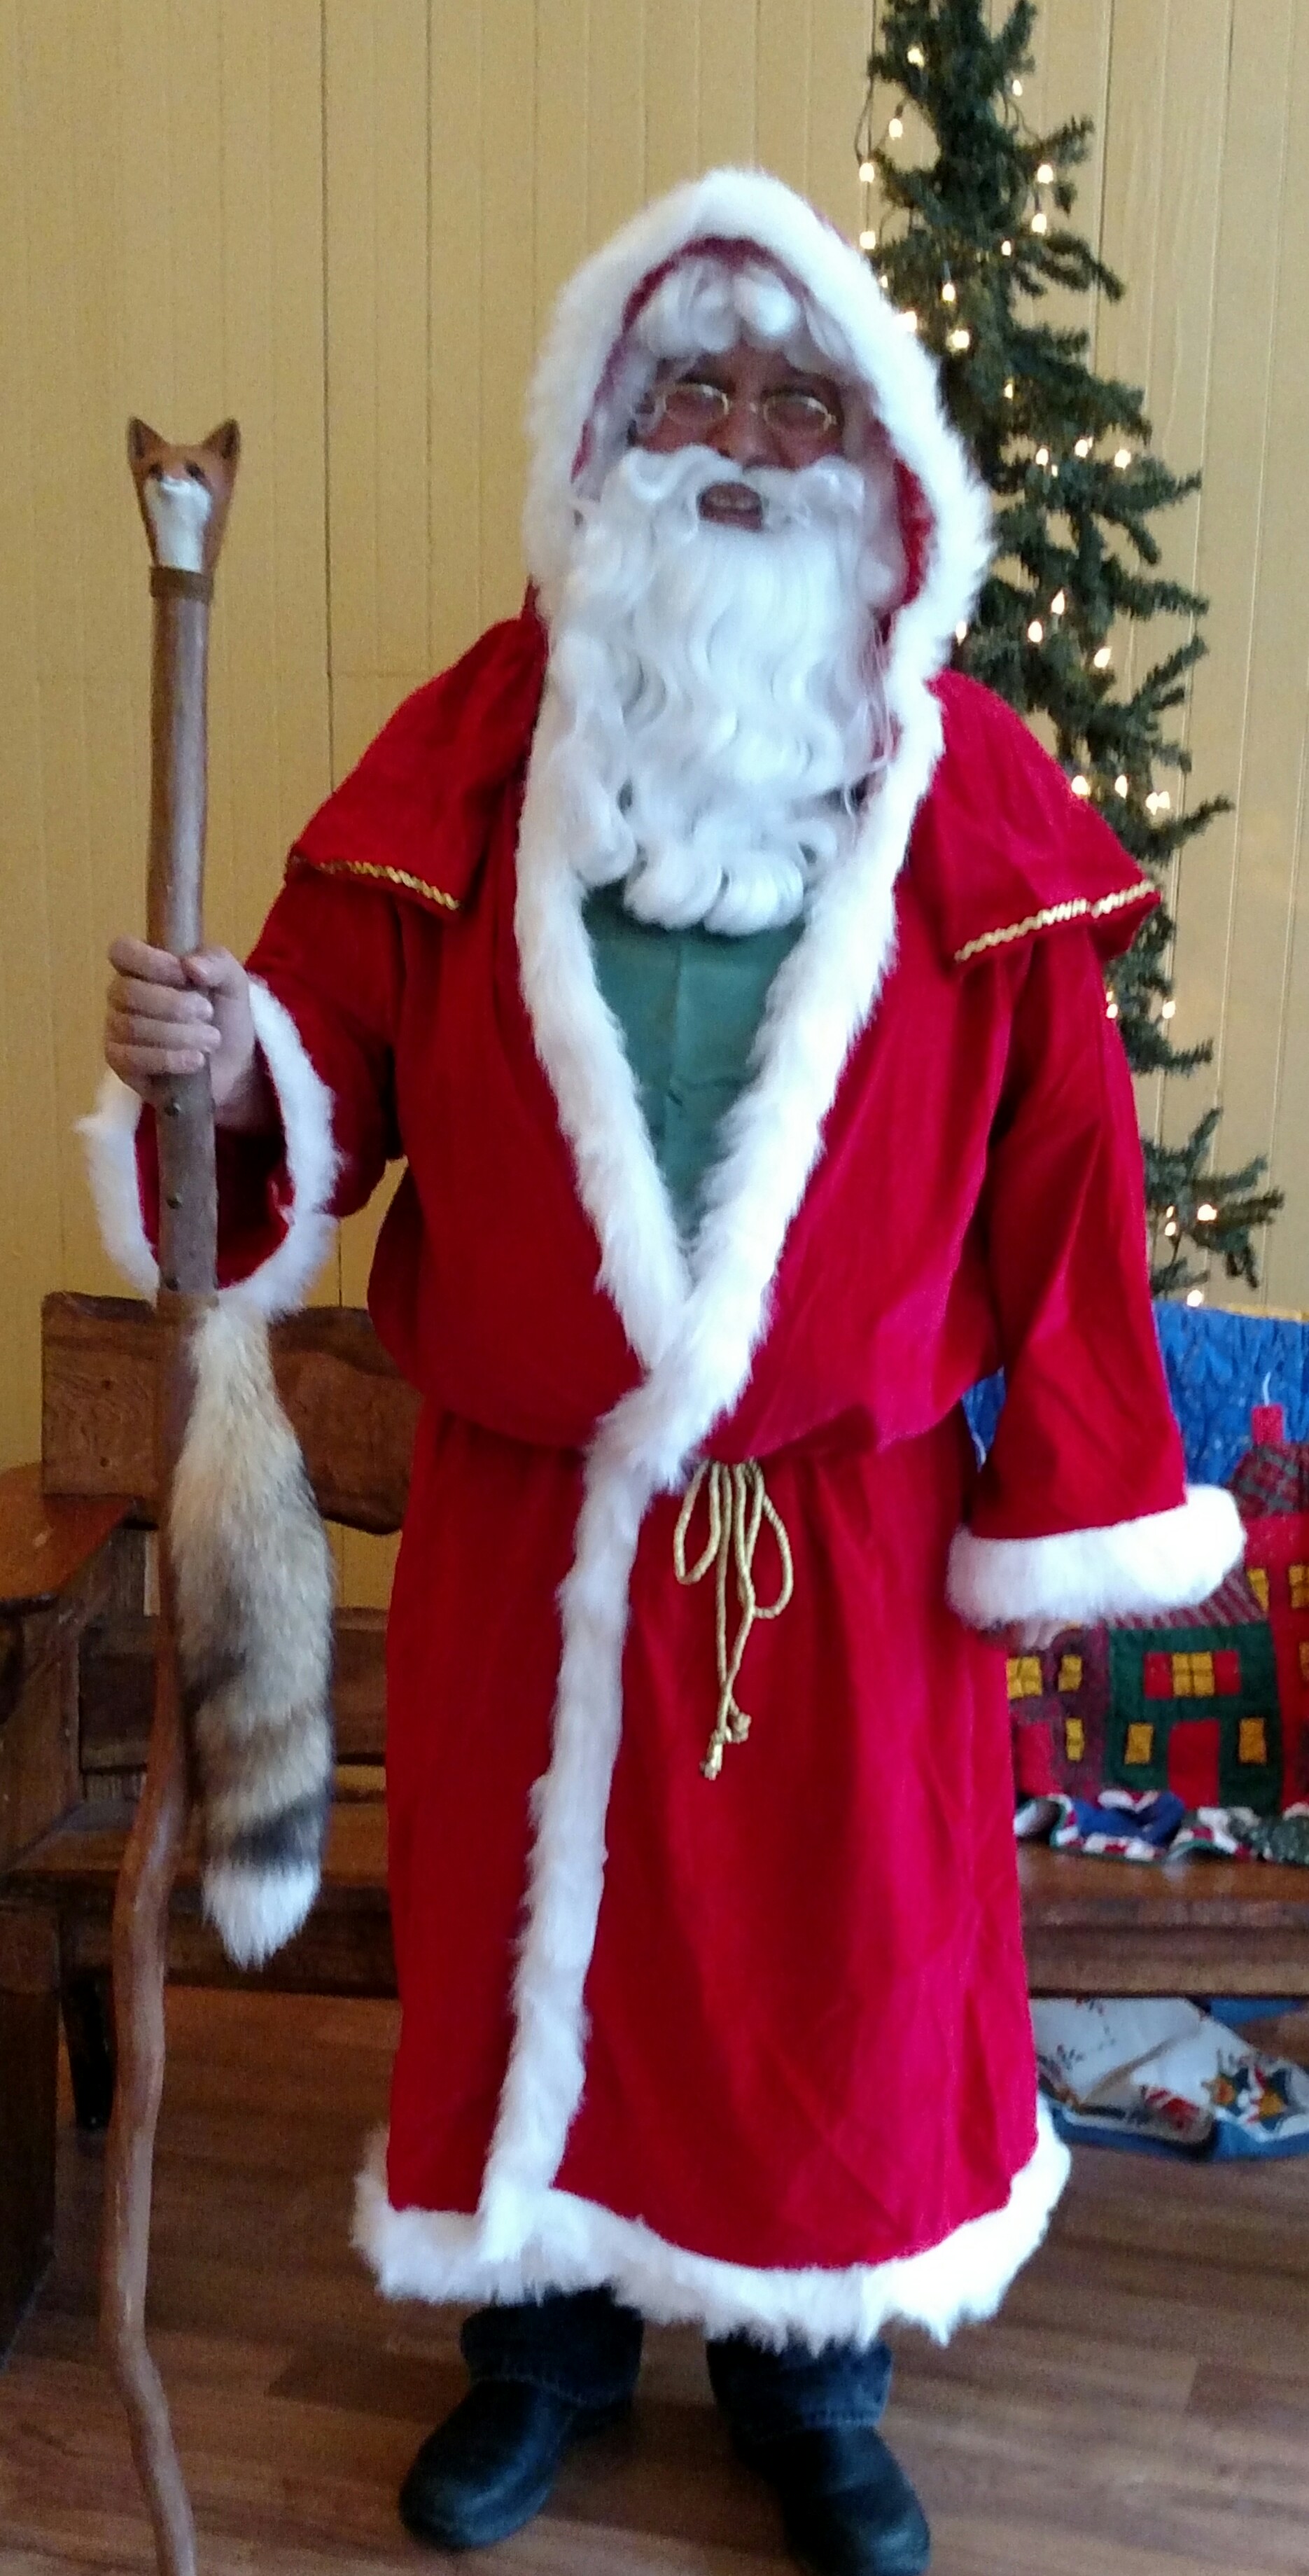 Fox as Santa